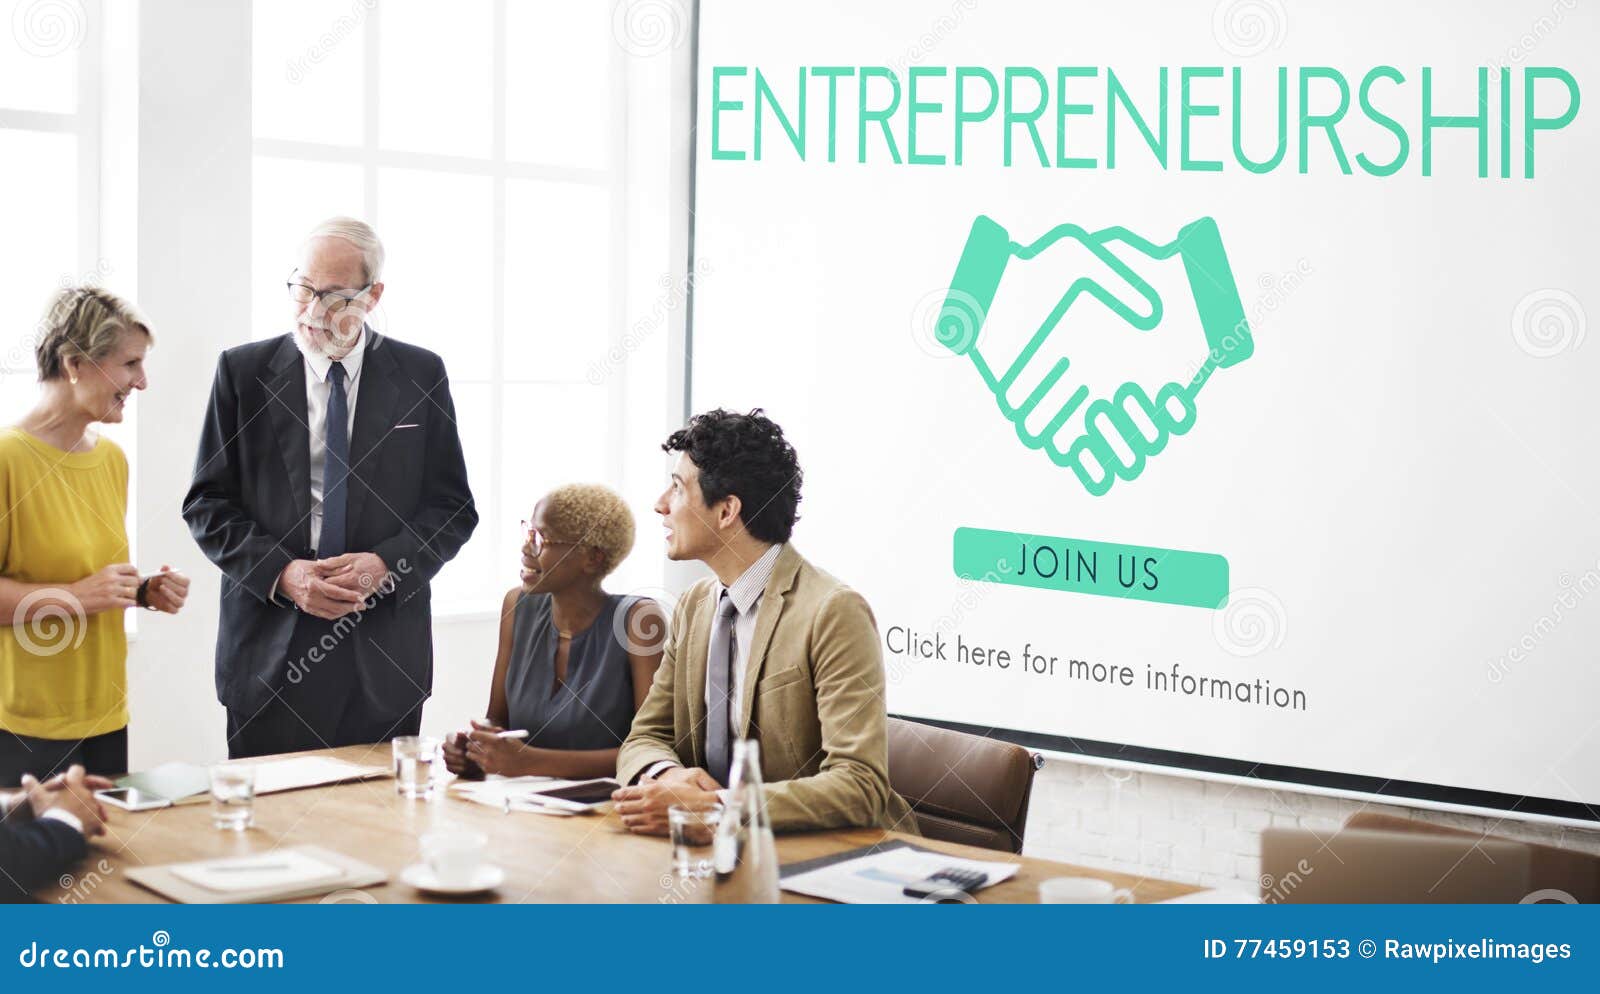 Entrepreneurship Corporate Enterprise Dealer Concept Stock Image ...